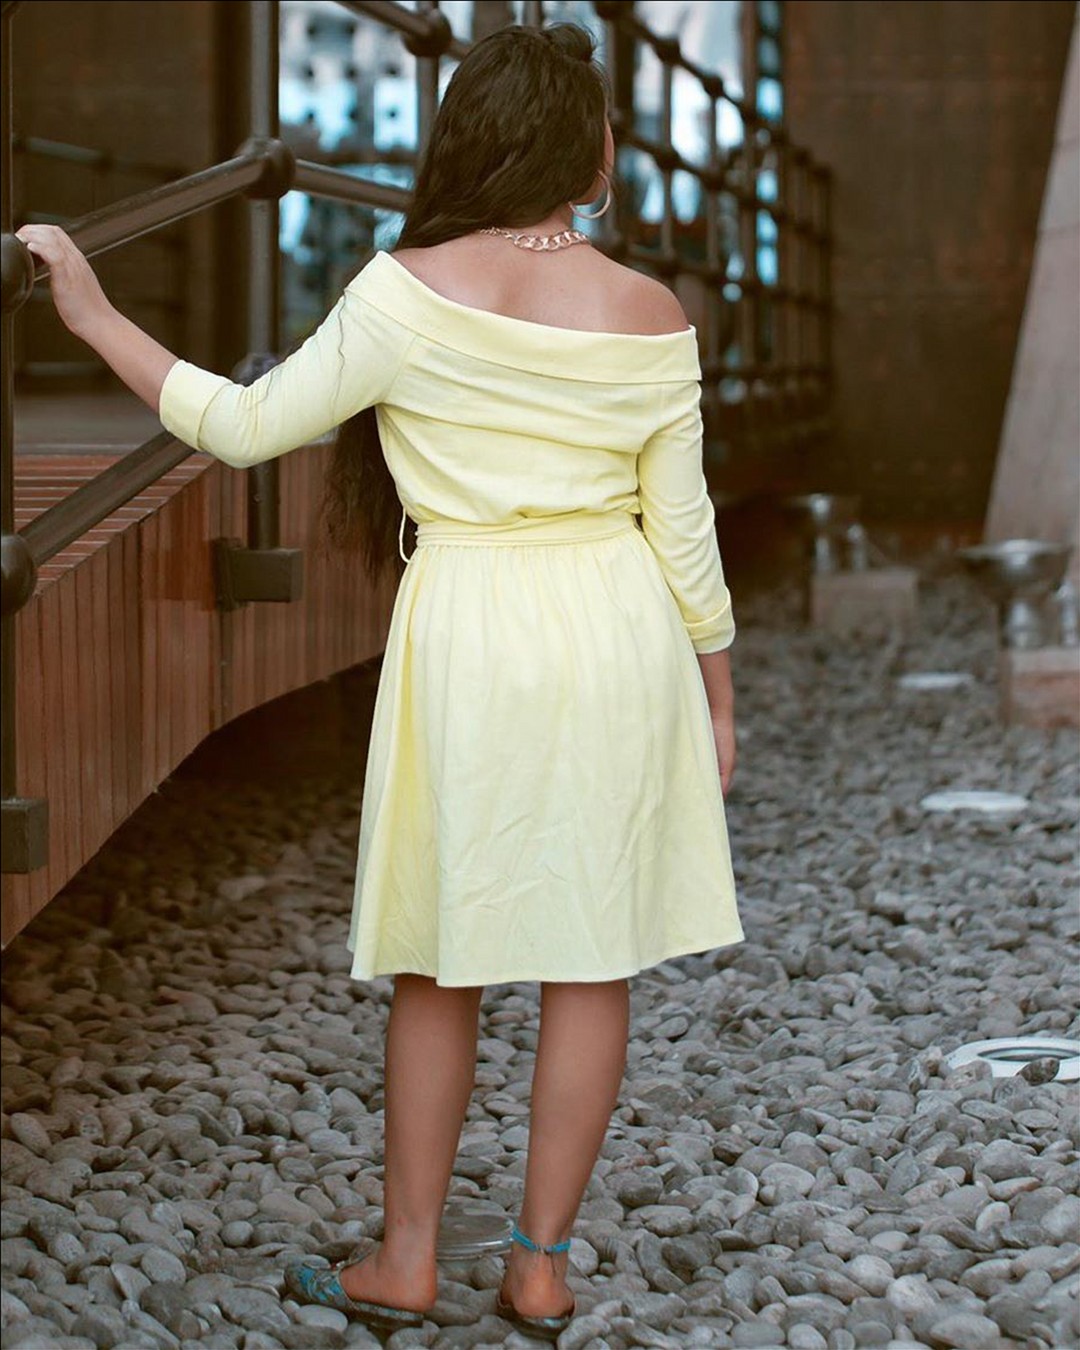 Ghrour Safar Yellow Dress Teen Girl Photo 01